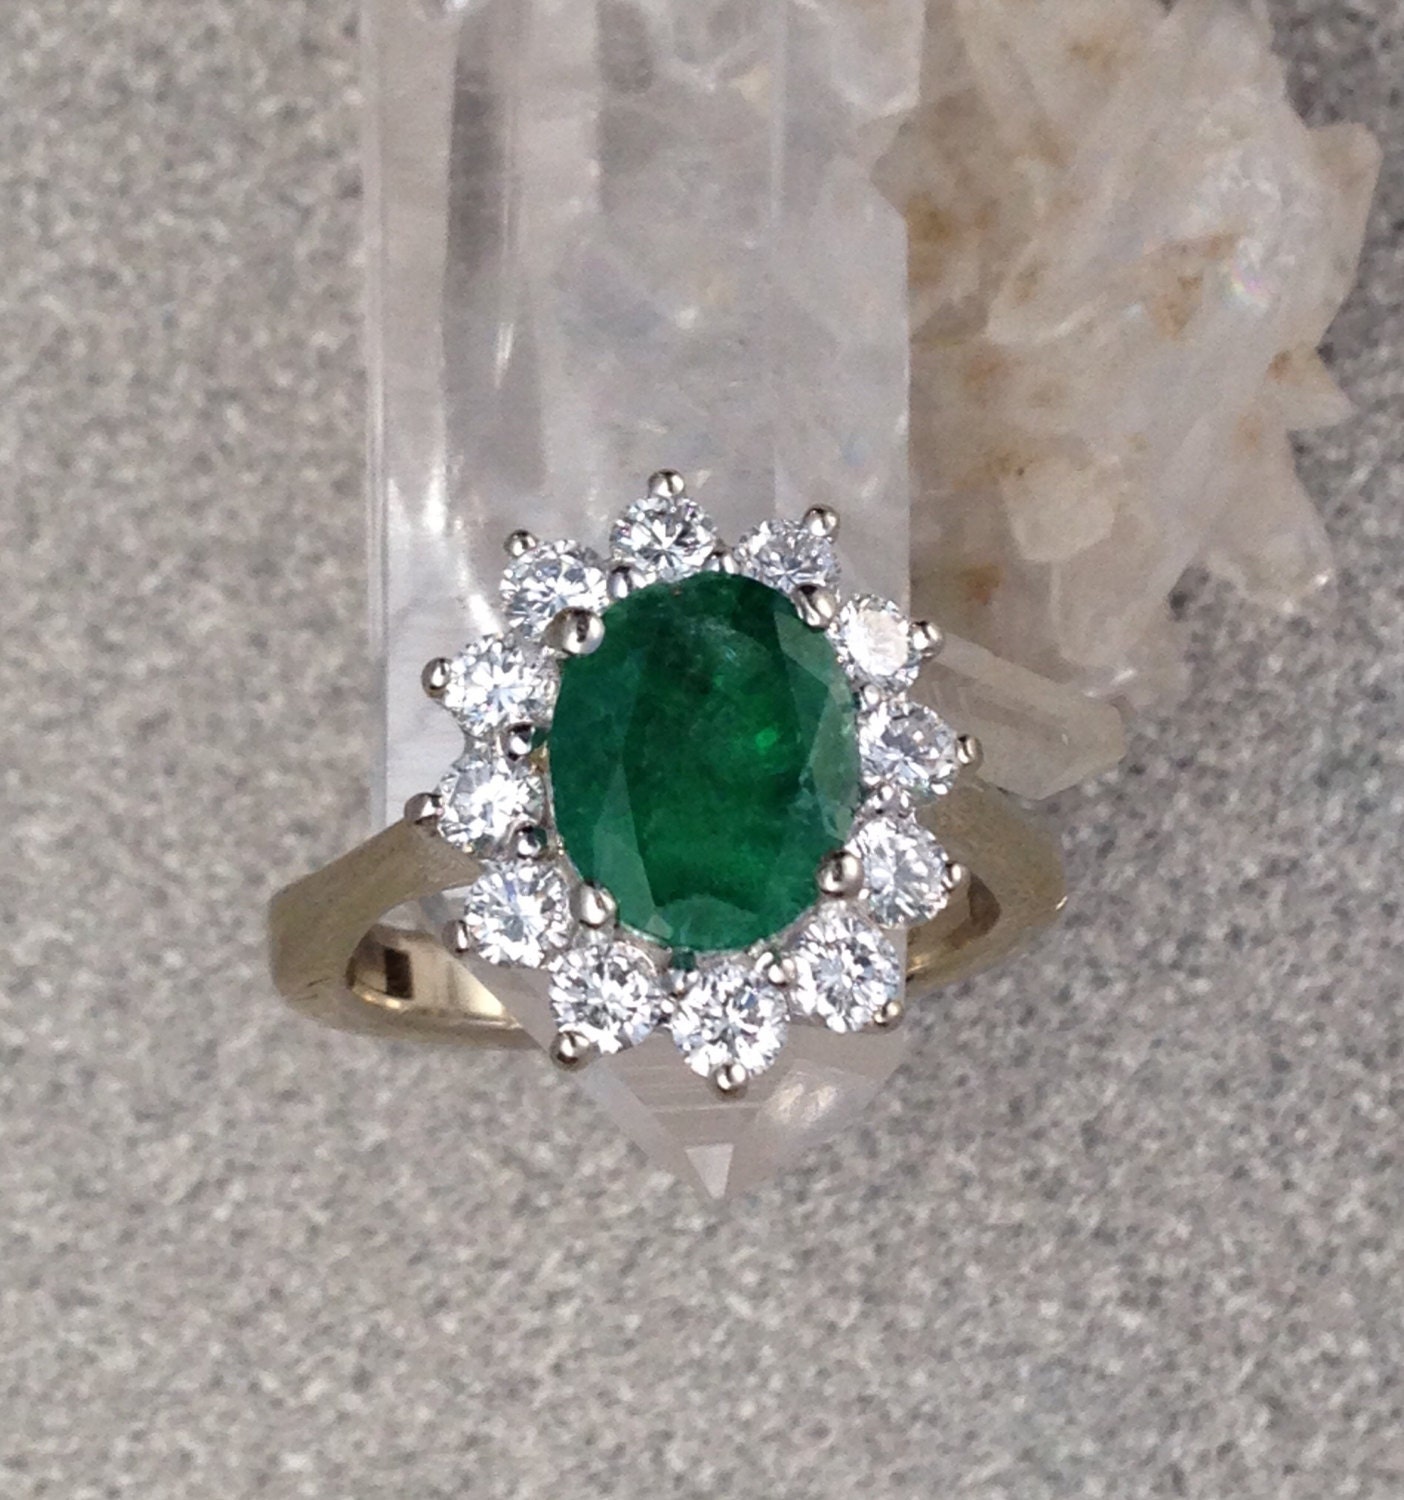 Emerald and diamond ring 14k white gold .70 carats diamonds | Etsy